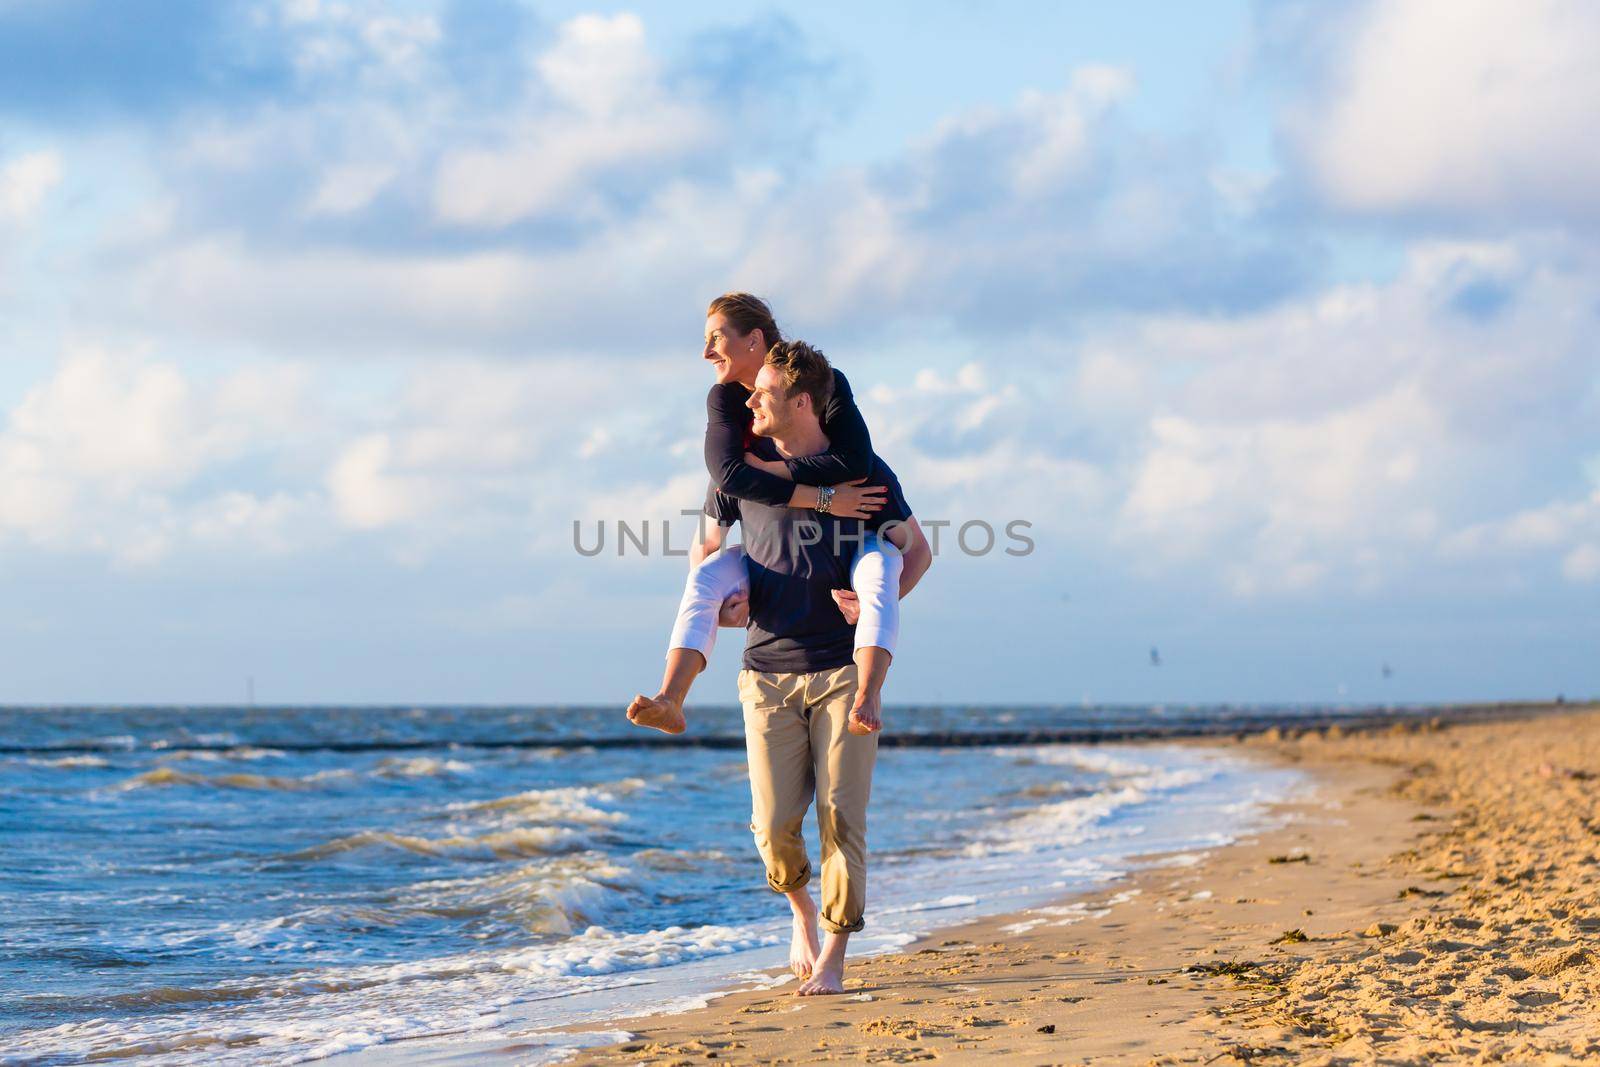 man carrying woman piggyback at beach by Kzenon